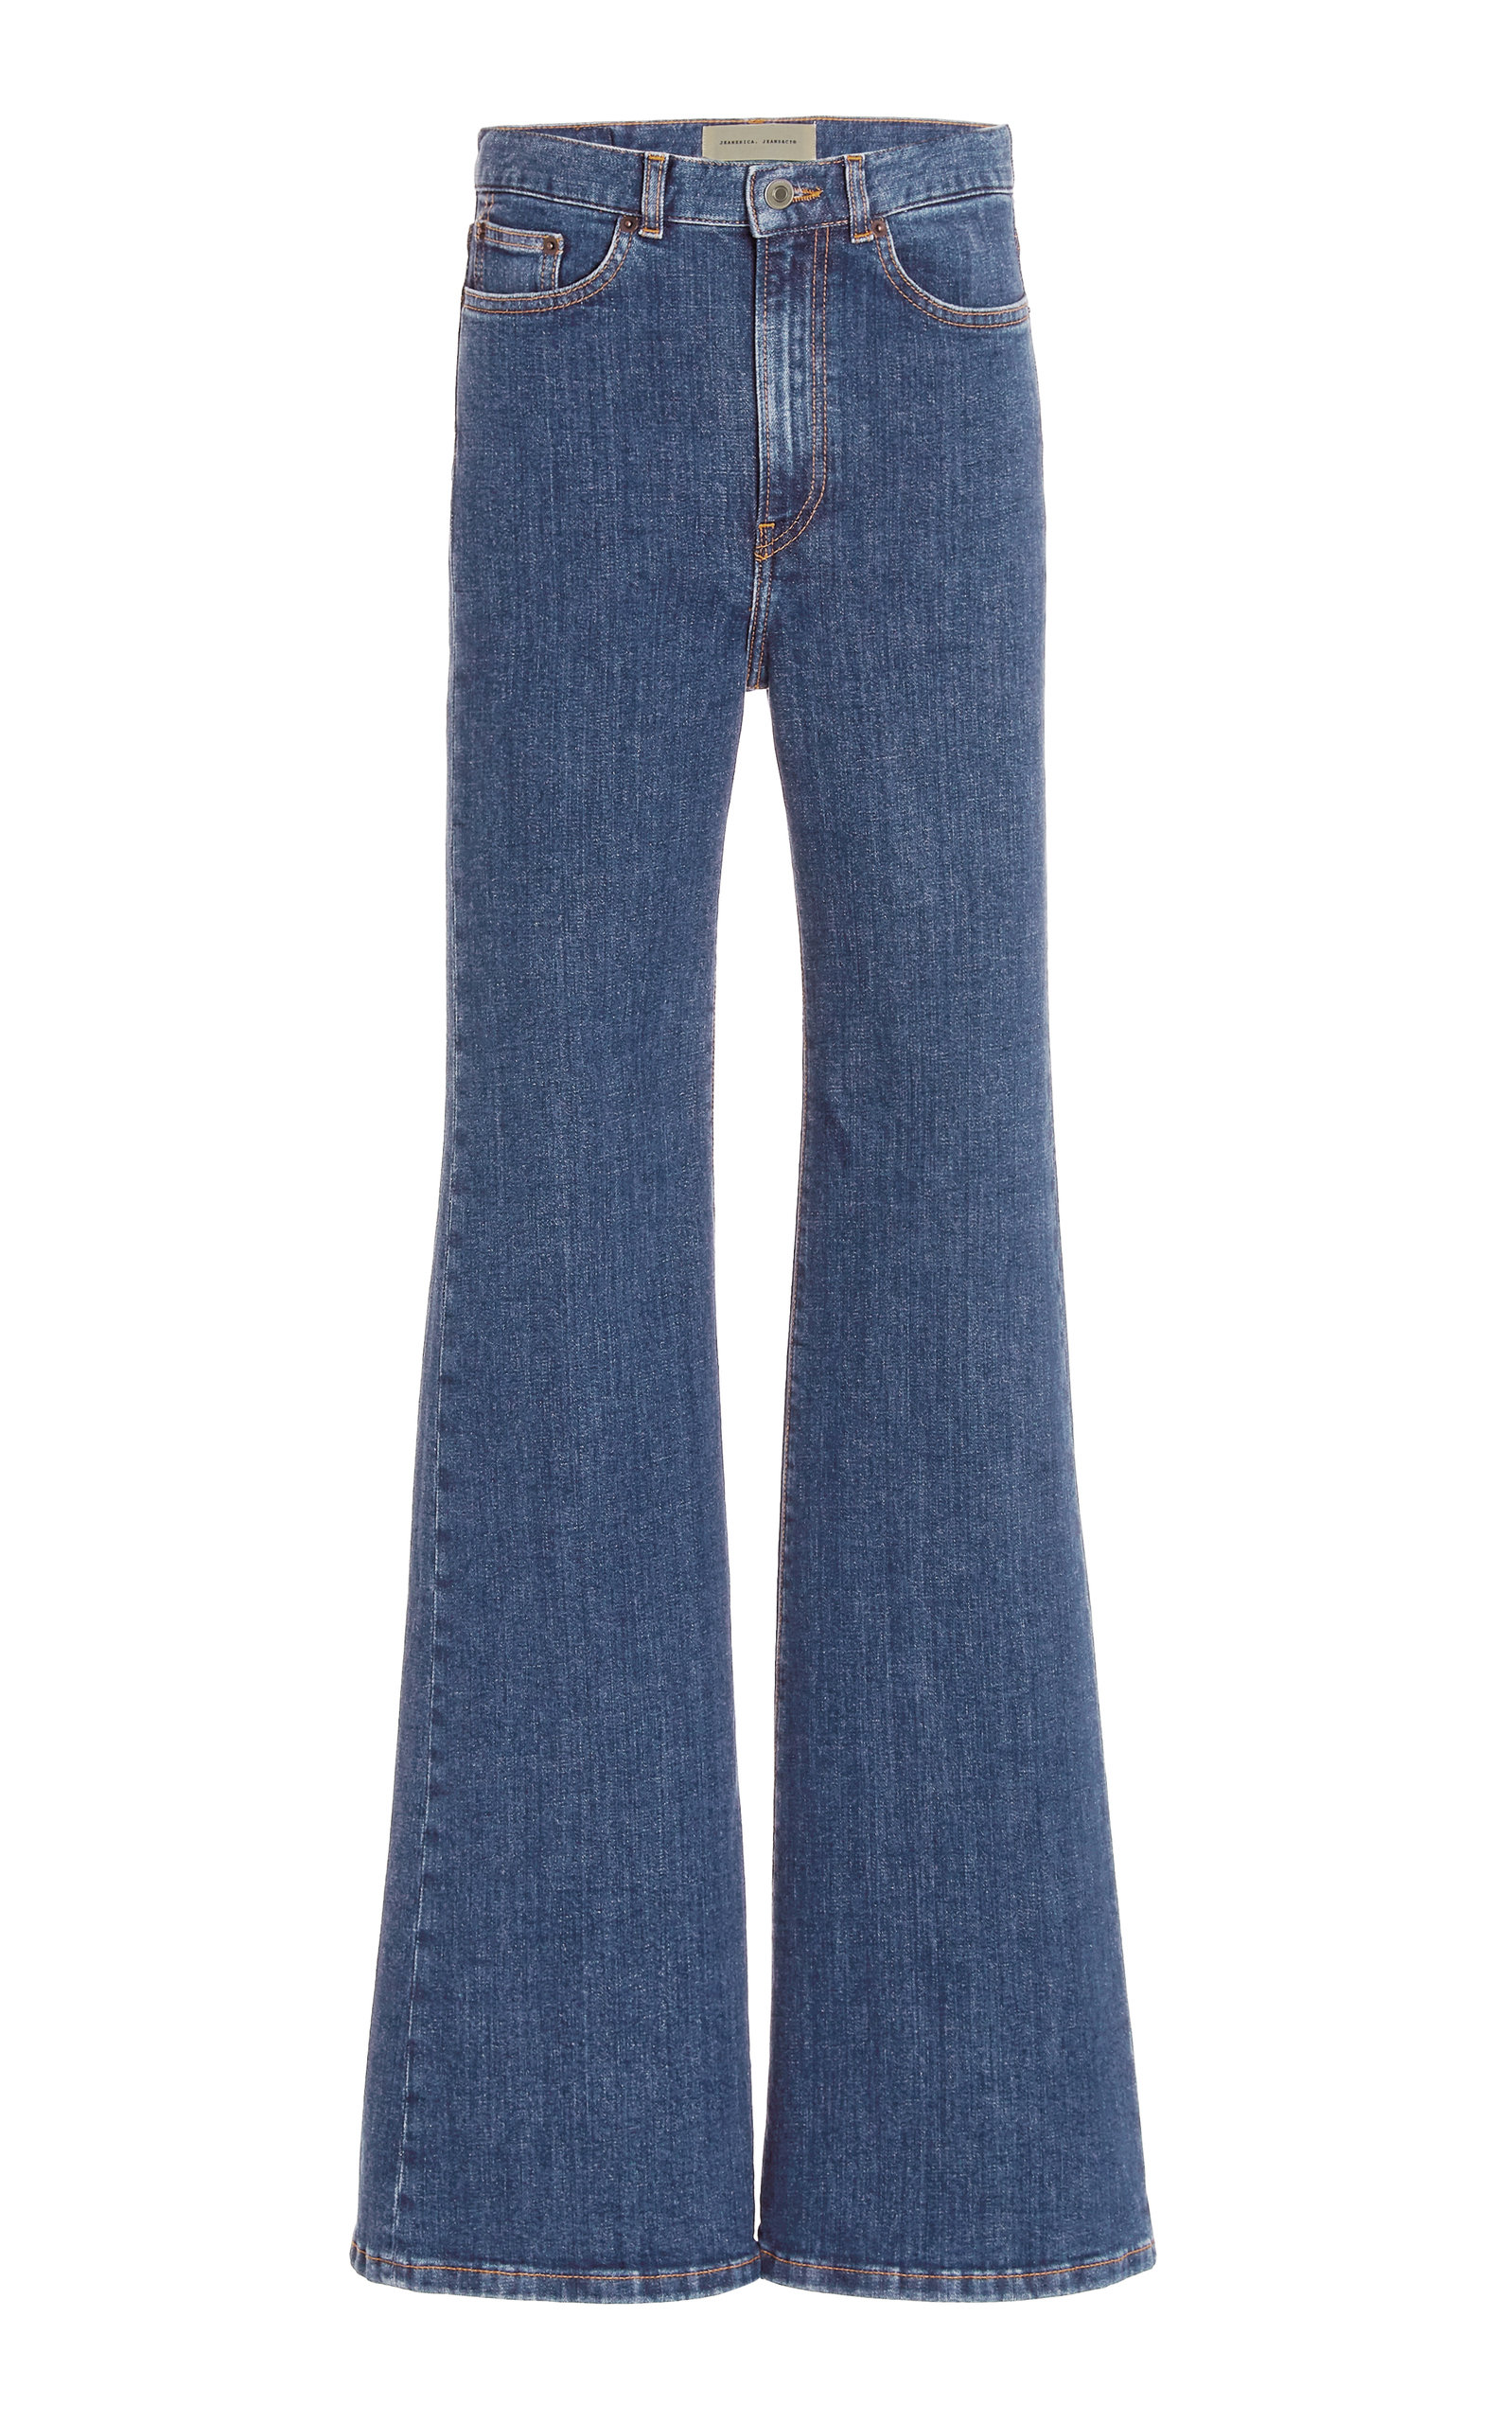 Jeanerica - Women's Fuji Stretch High-Rise Flared Jeans - Light Wash ...